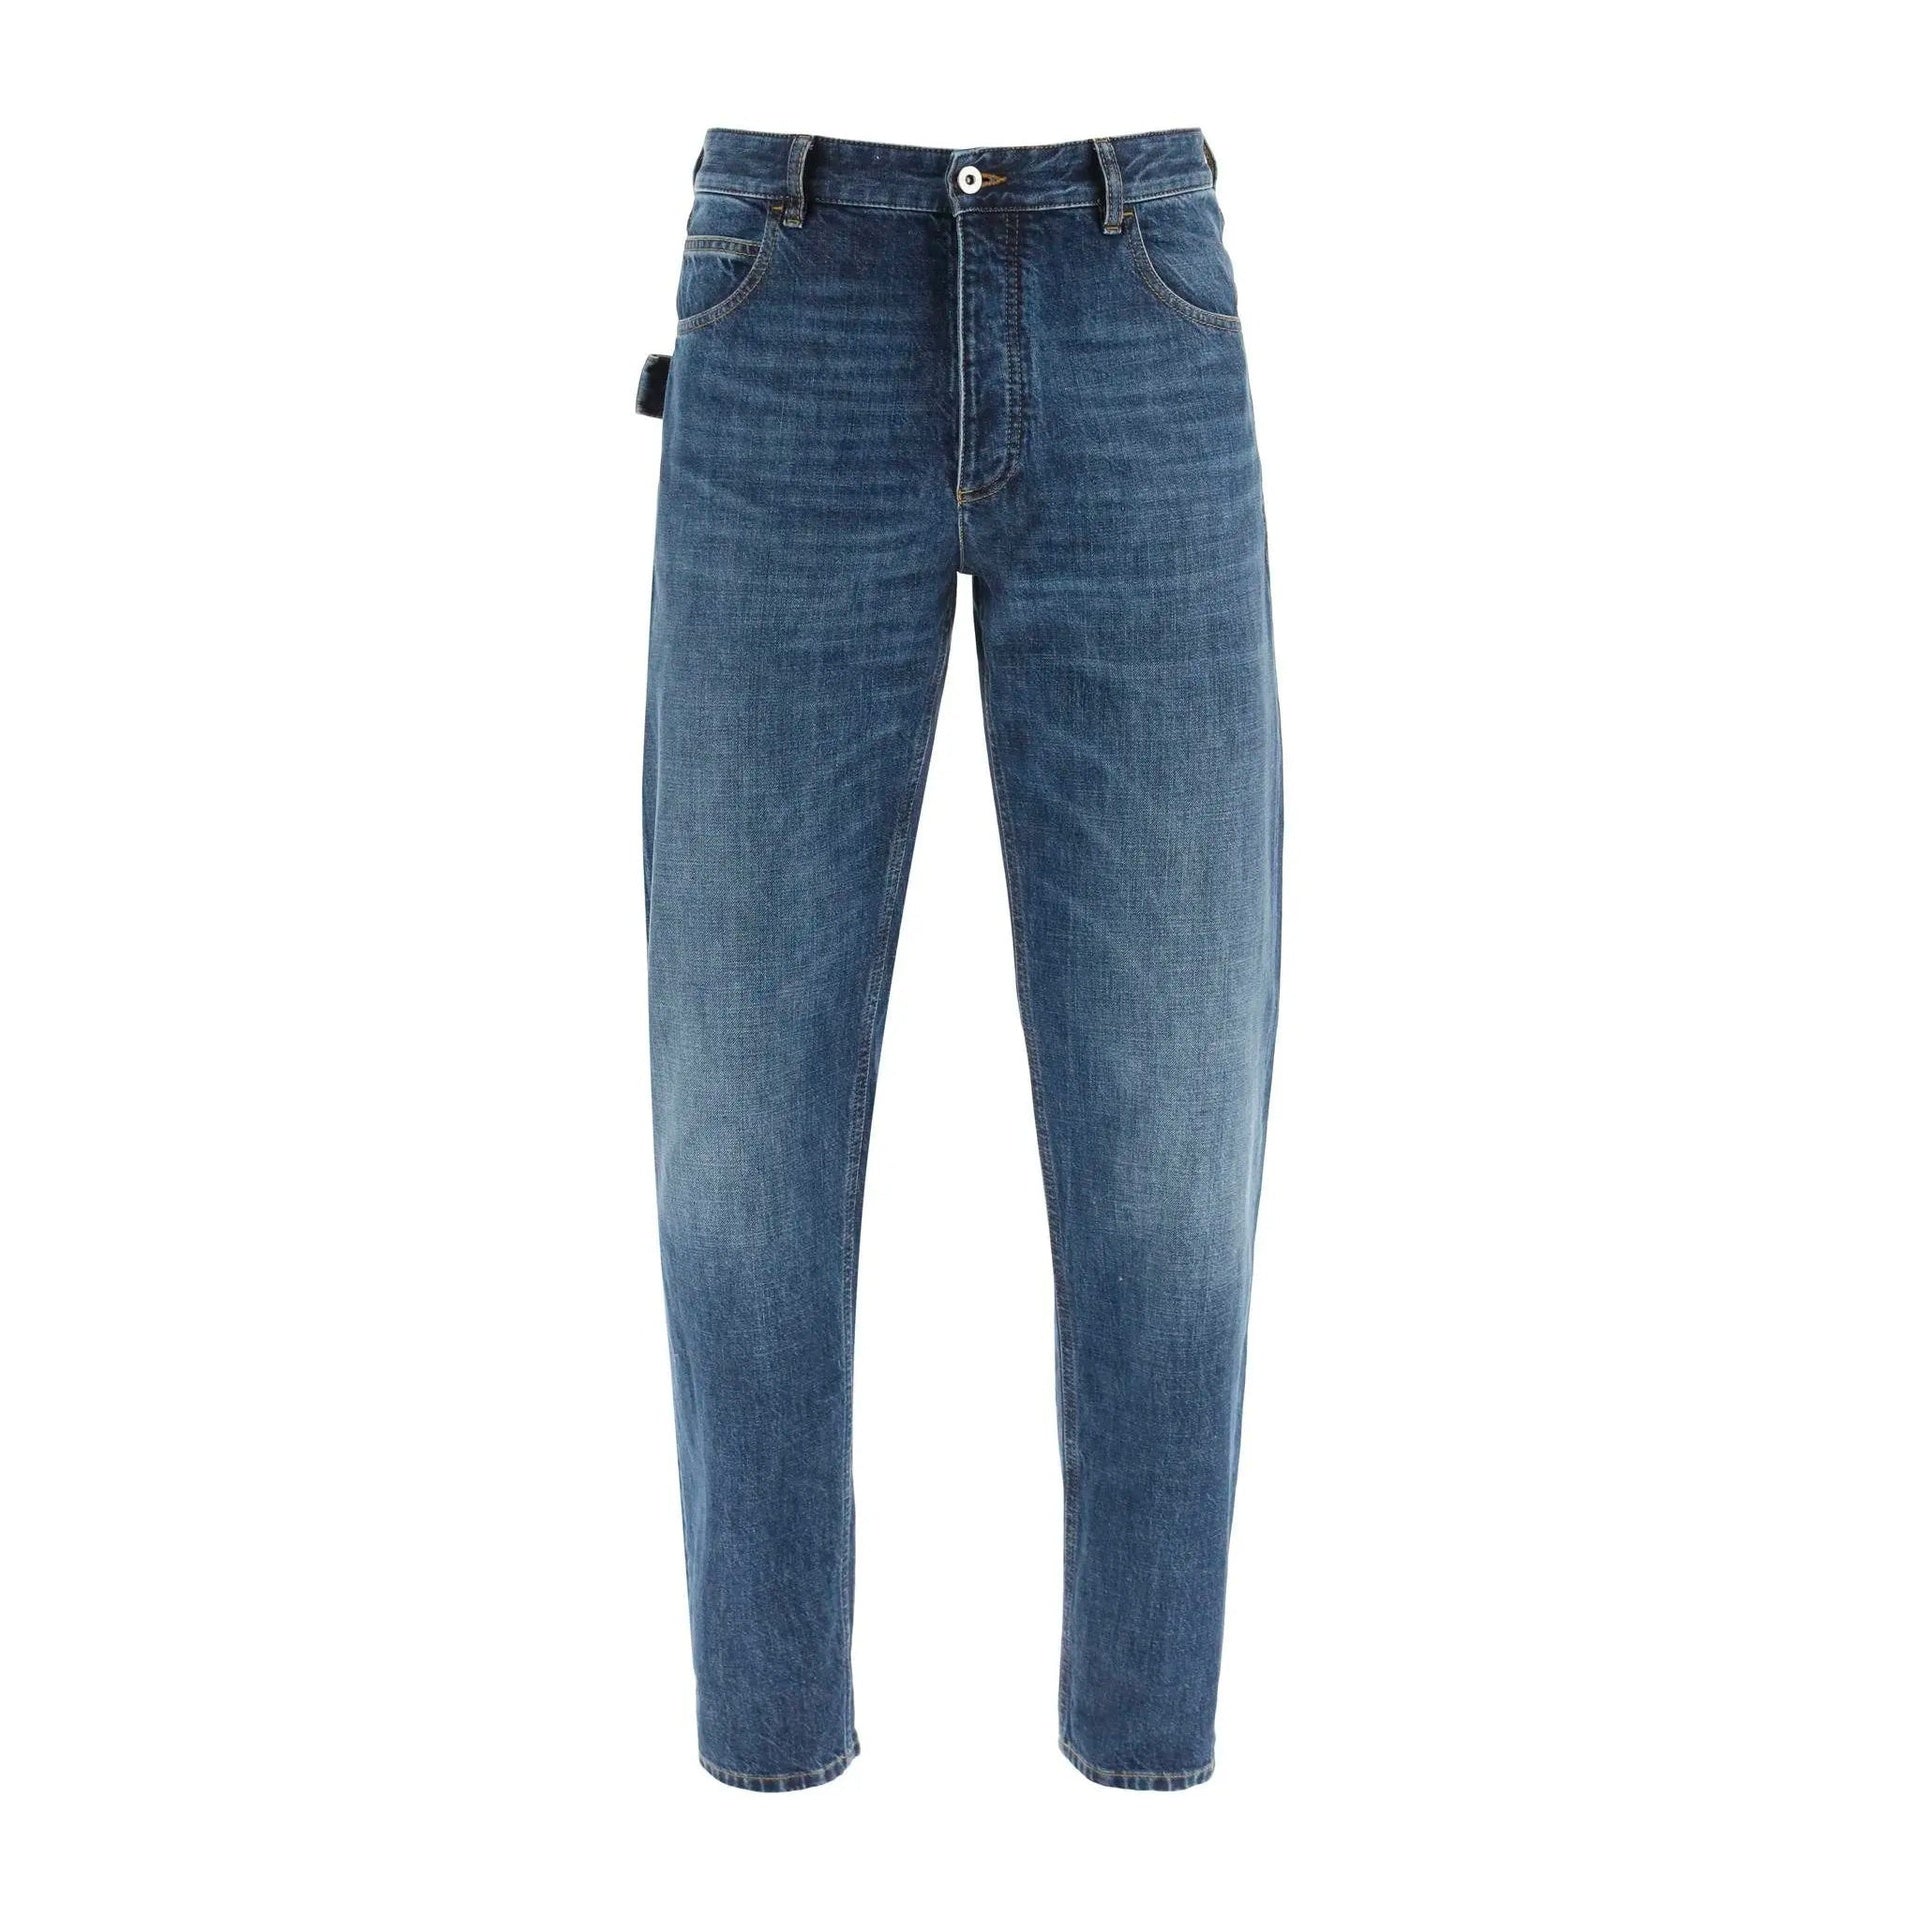 BOTTEGA VENETA-Bottega Veneta Denim Jeans-MEN CLOTHING-Outlet-Sale